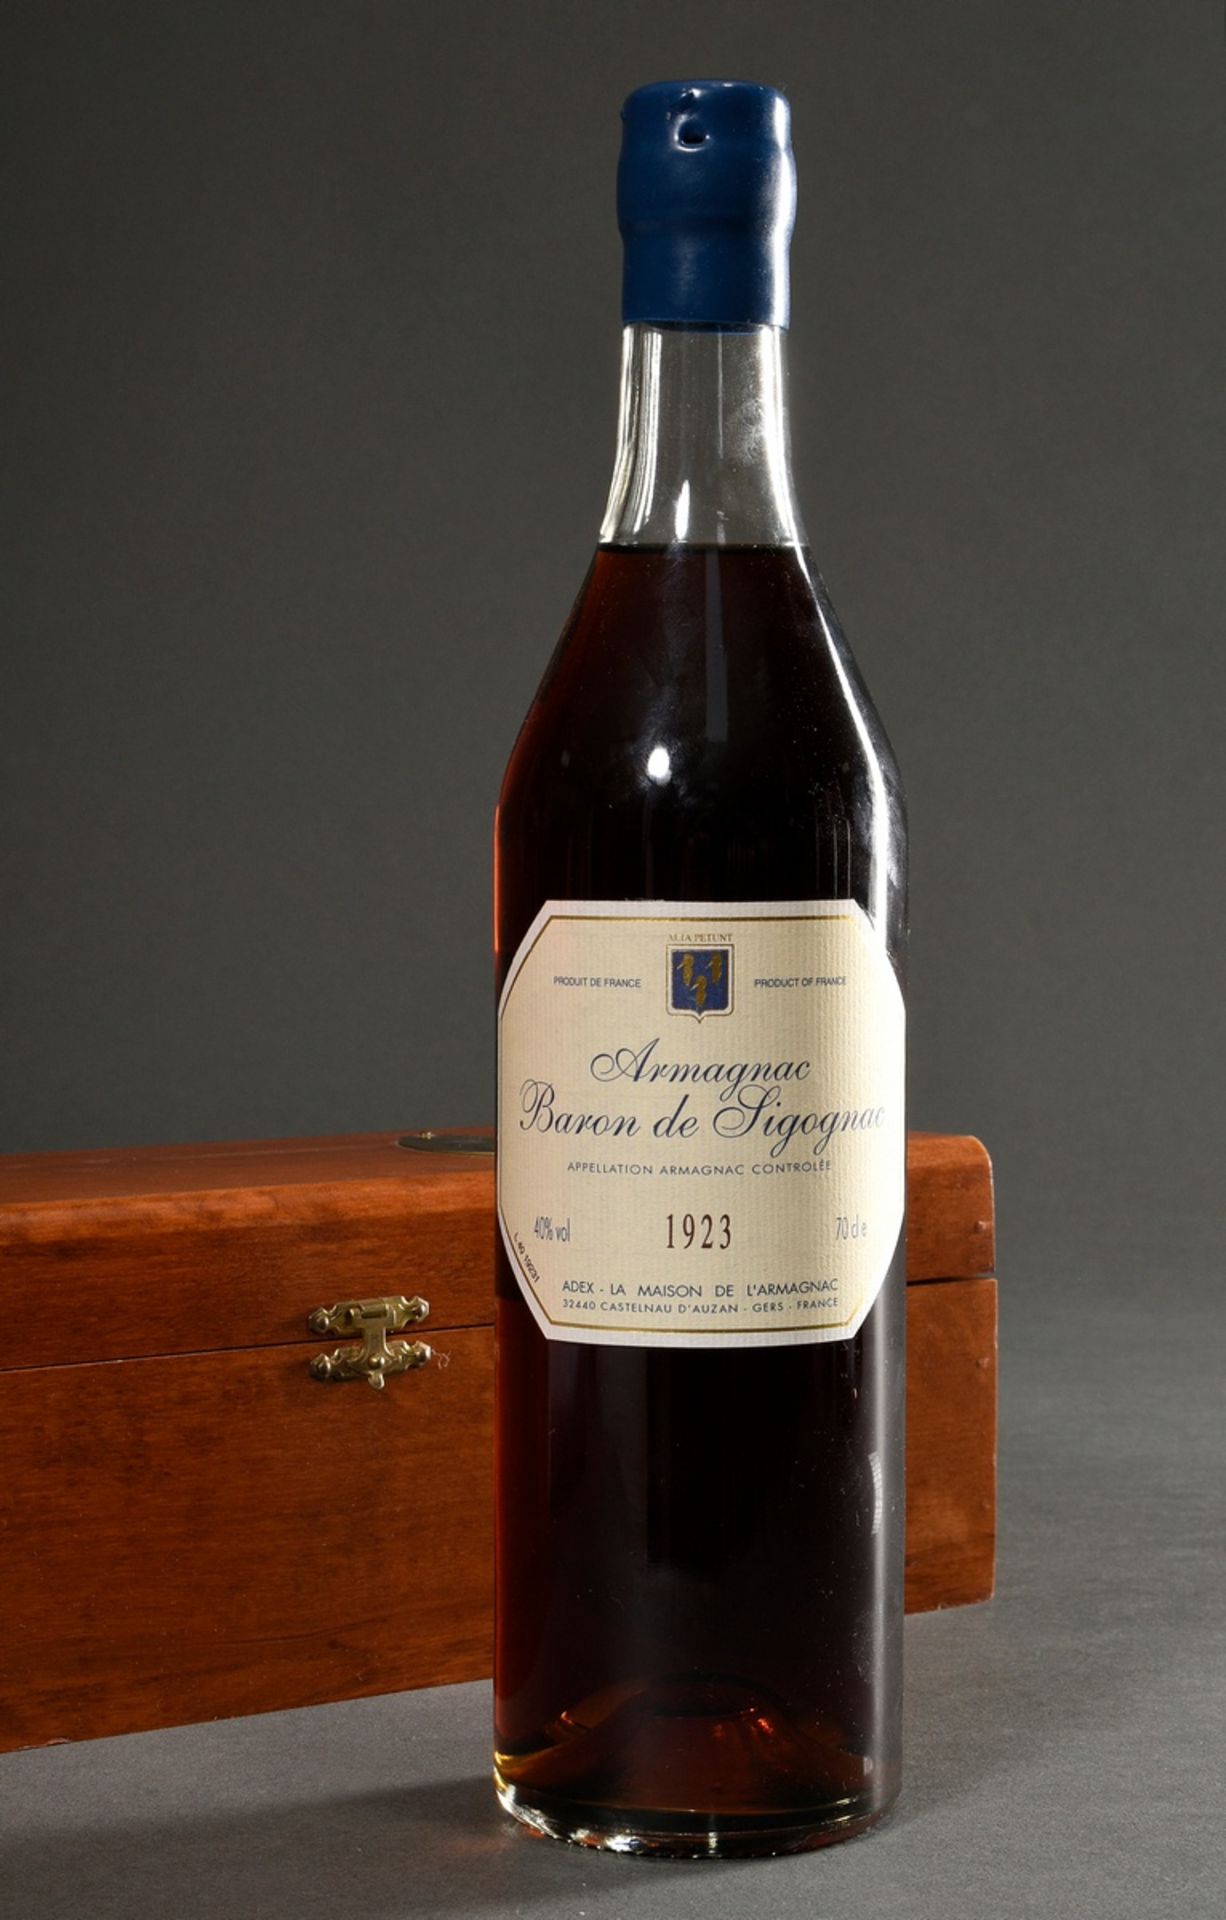 Bottle of Armagnac "Baron de Sigognac" 1923, in original wooden box with brass label, Gers, France,